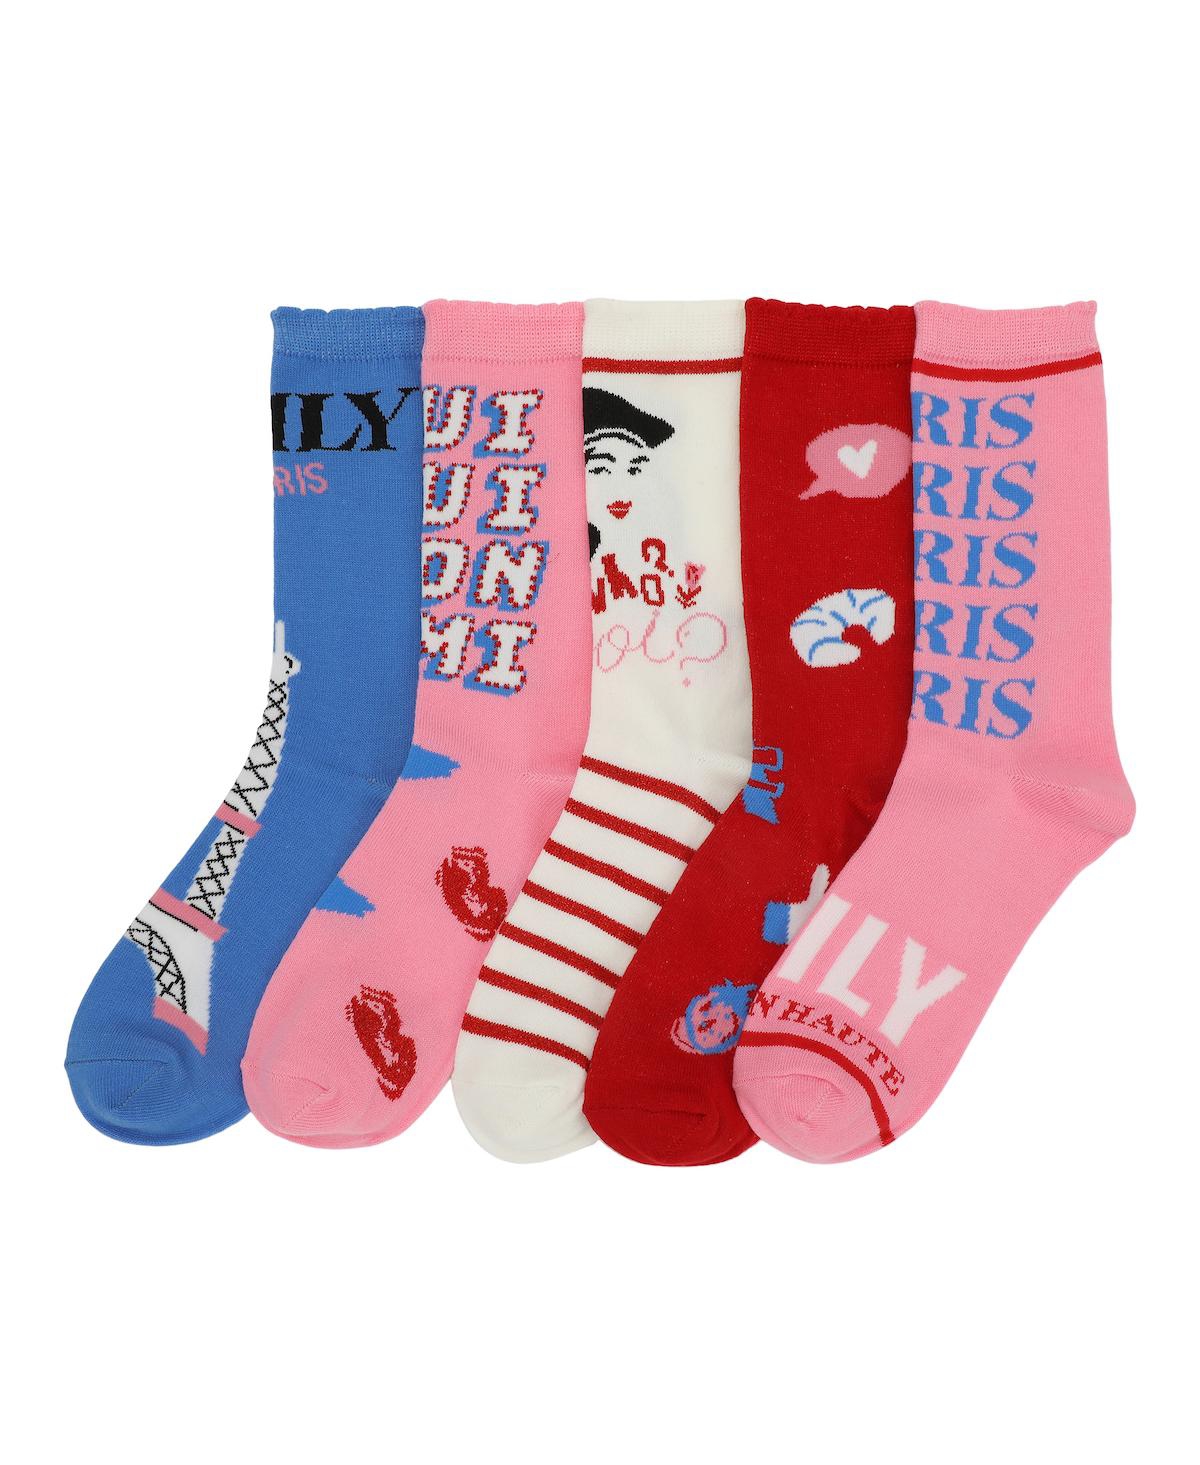 Men's Adult Crew Socks - 5-Pack of Parisian Chic! - Multicolored